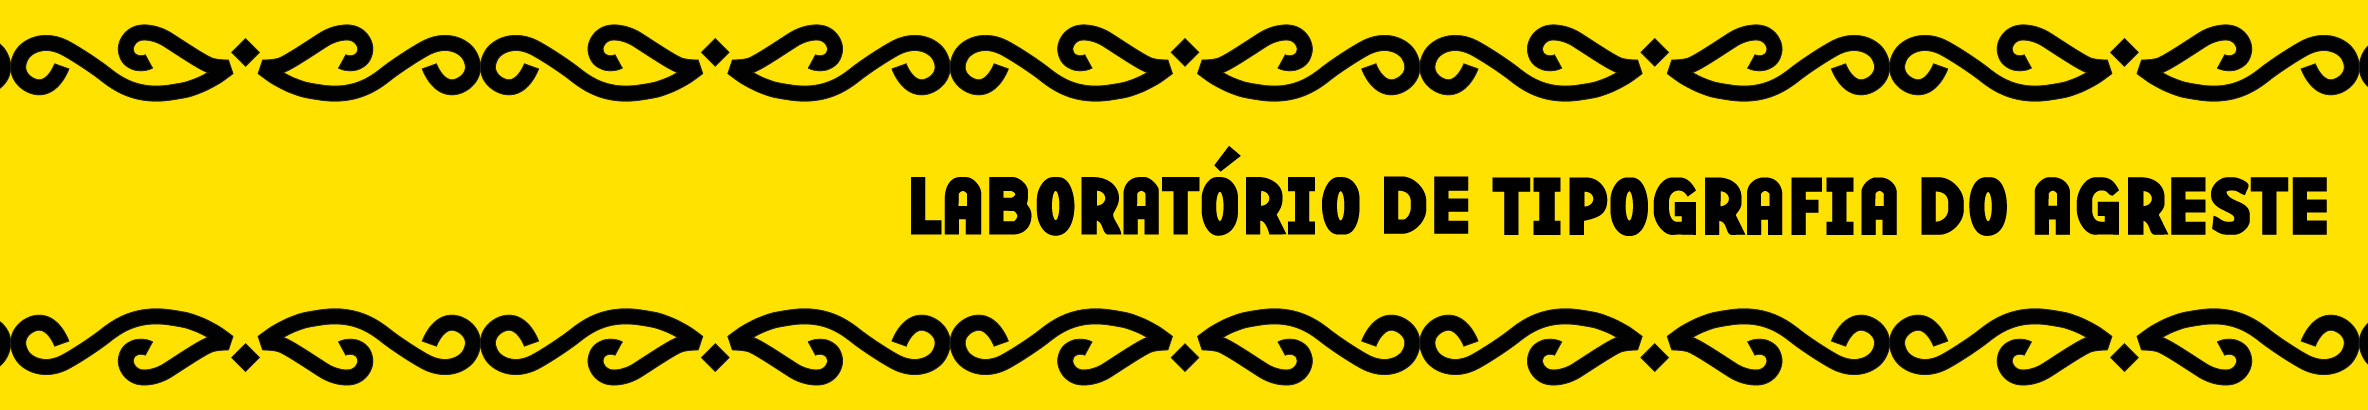 Laboratório de Tipografia do Agreste's profile banner